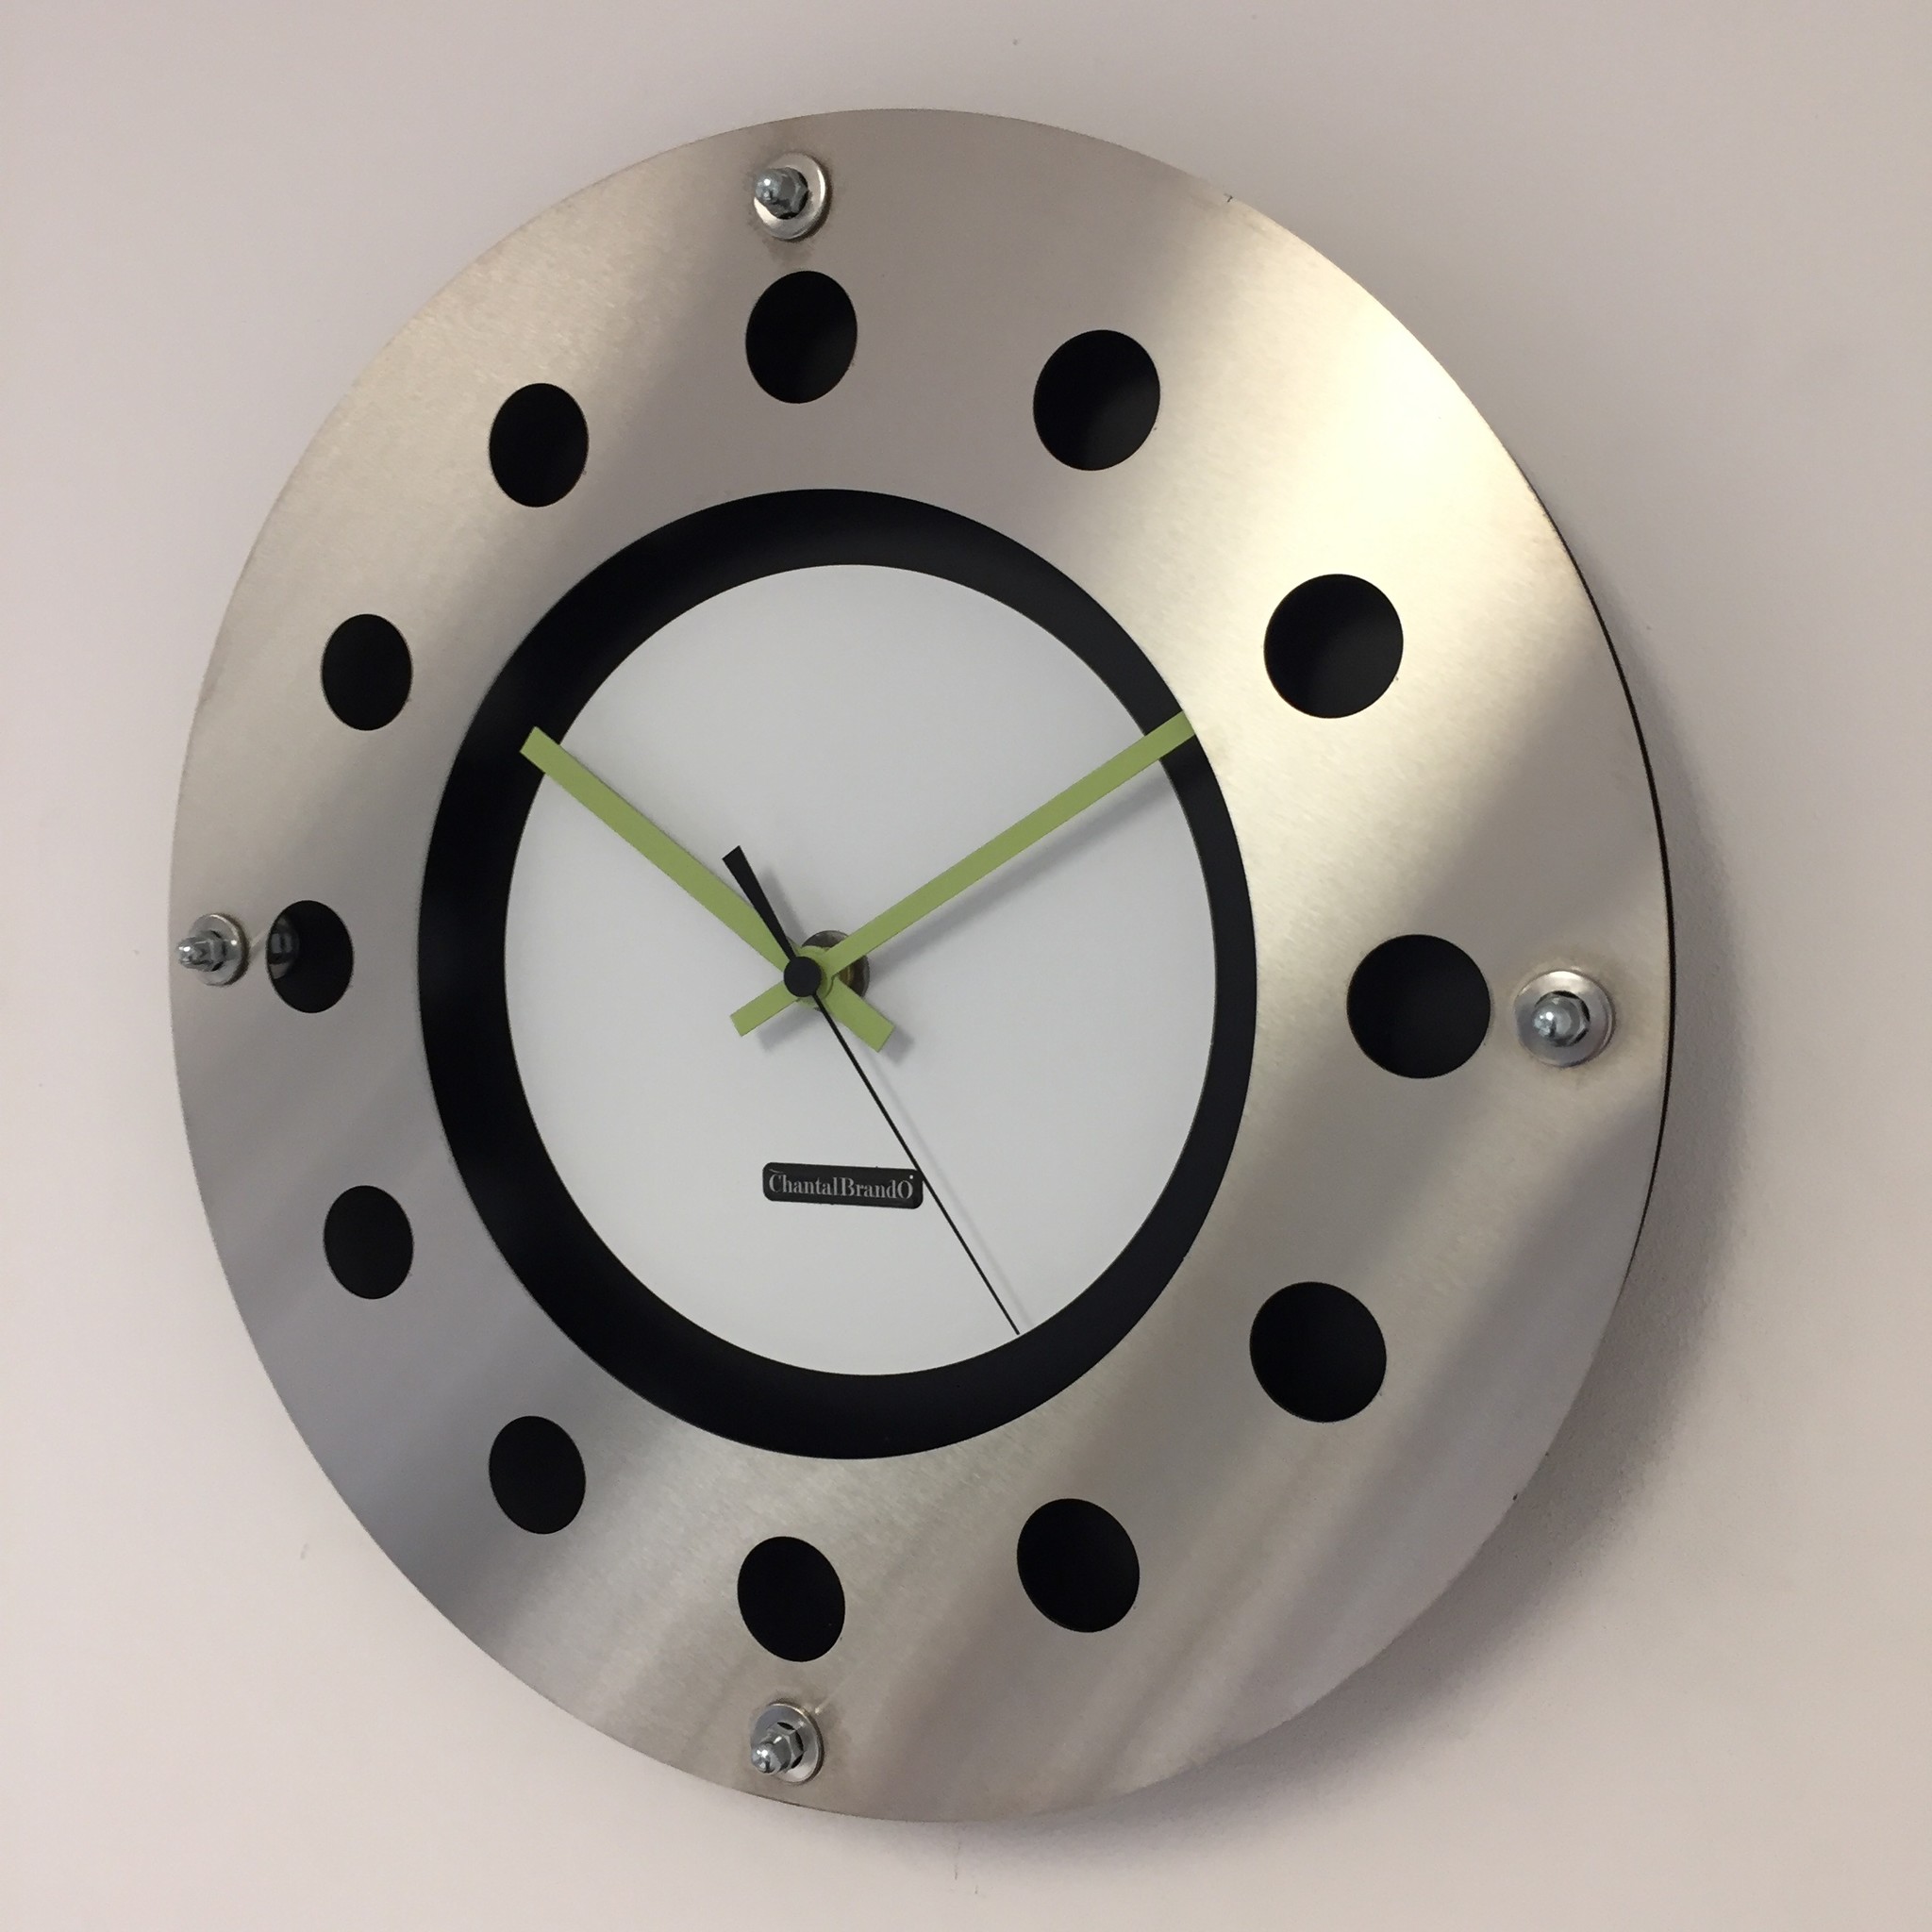 ChantalBrandO Design - wall clock mecanica full black with white color small indoor lemmon black pointer modern dutch design handmade 40 cm